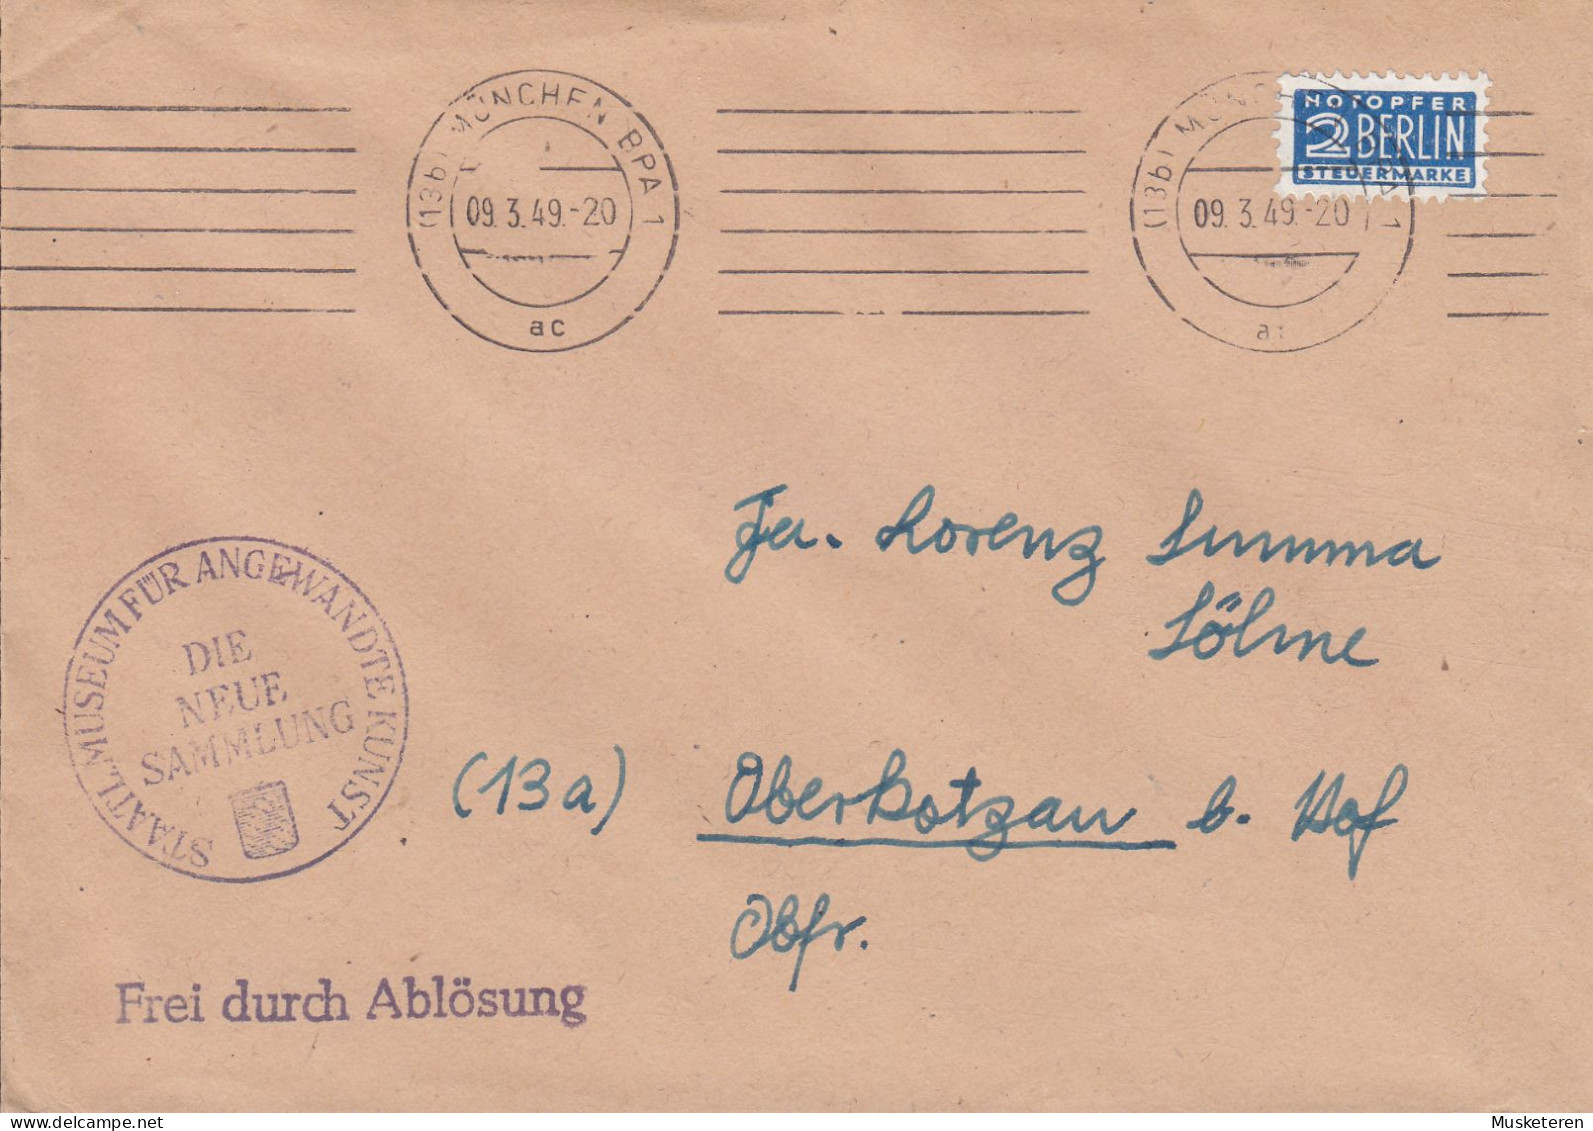 Berlin DIE NEUE SAMMLUNG Staatl. Museum Angewandte Kunt MÜNCHEN 1949 Cover Brief OBERKATZAN B. Hof. NOTOPFER Steuermarke - Brieven En Documenten